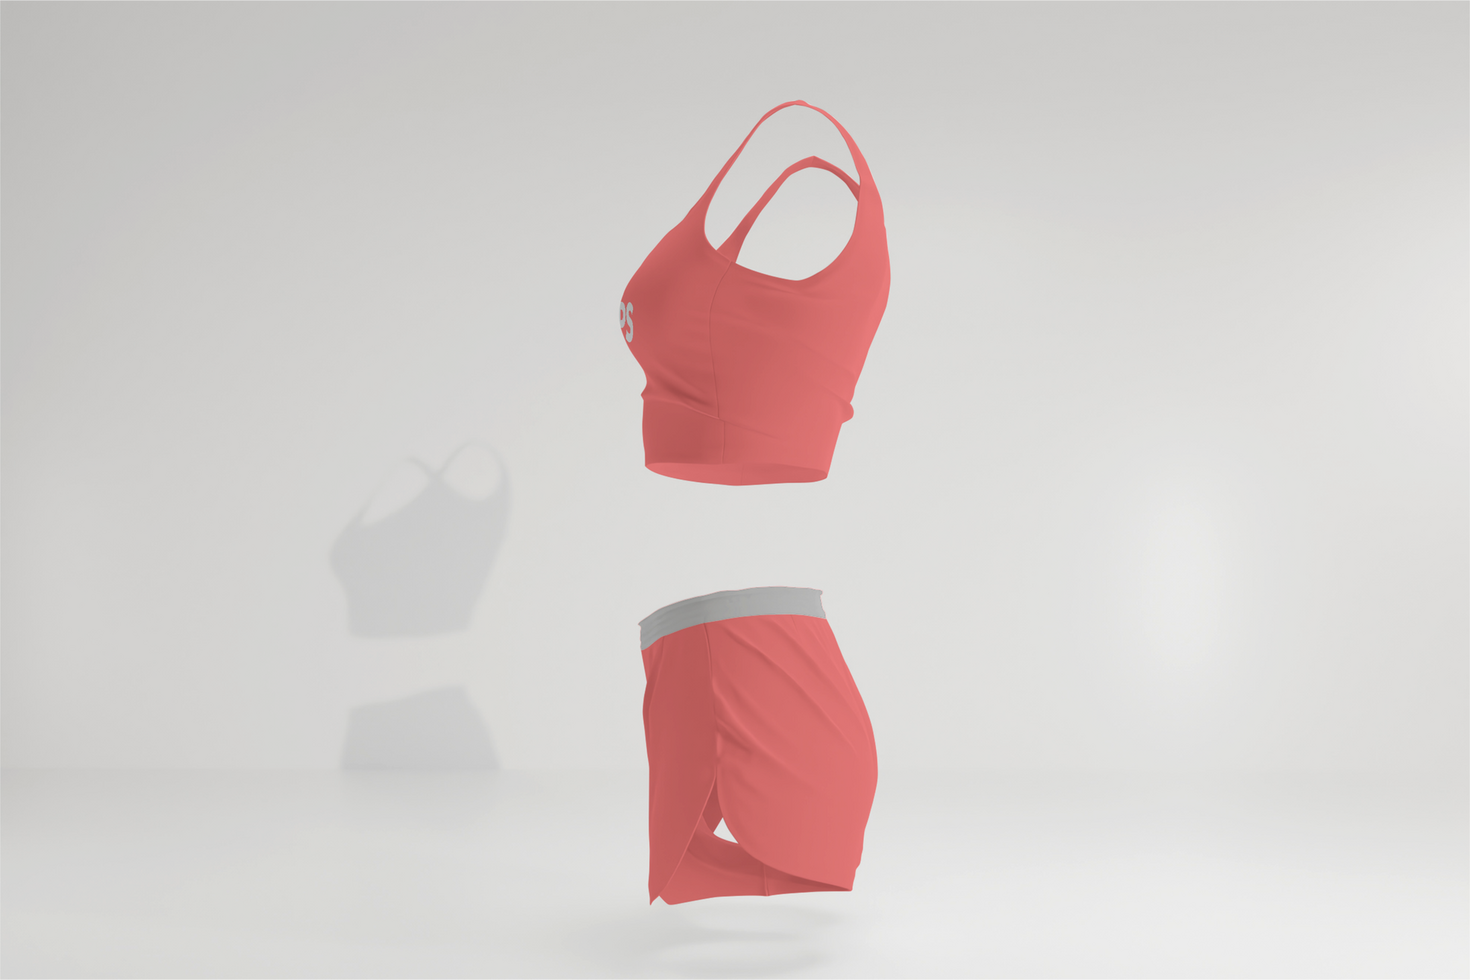 weiblich Sport Outfit Attrappe, Lehrmodell, Simulation Design psd